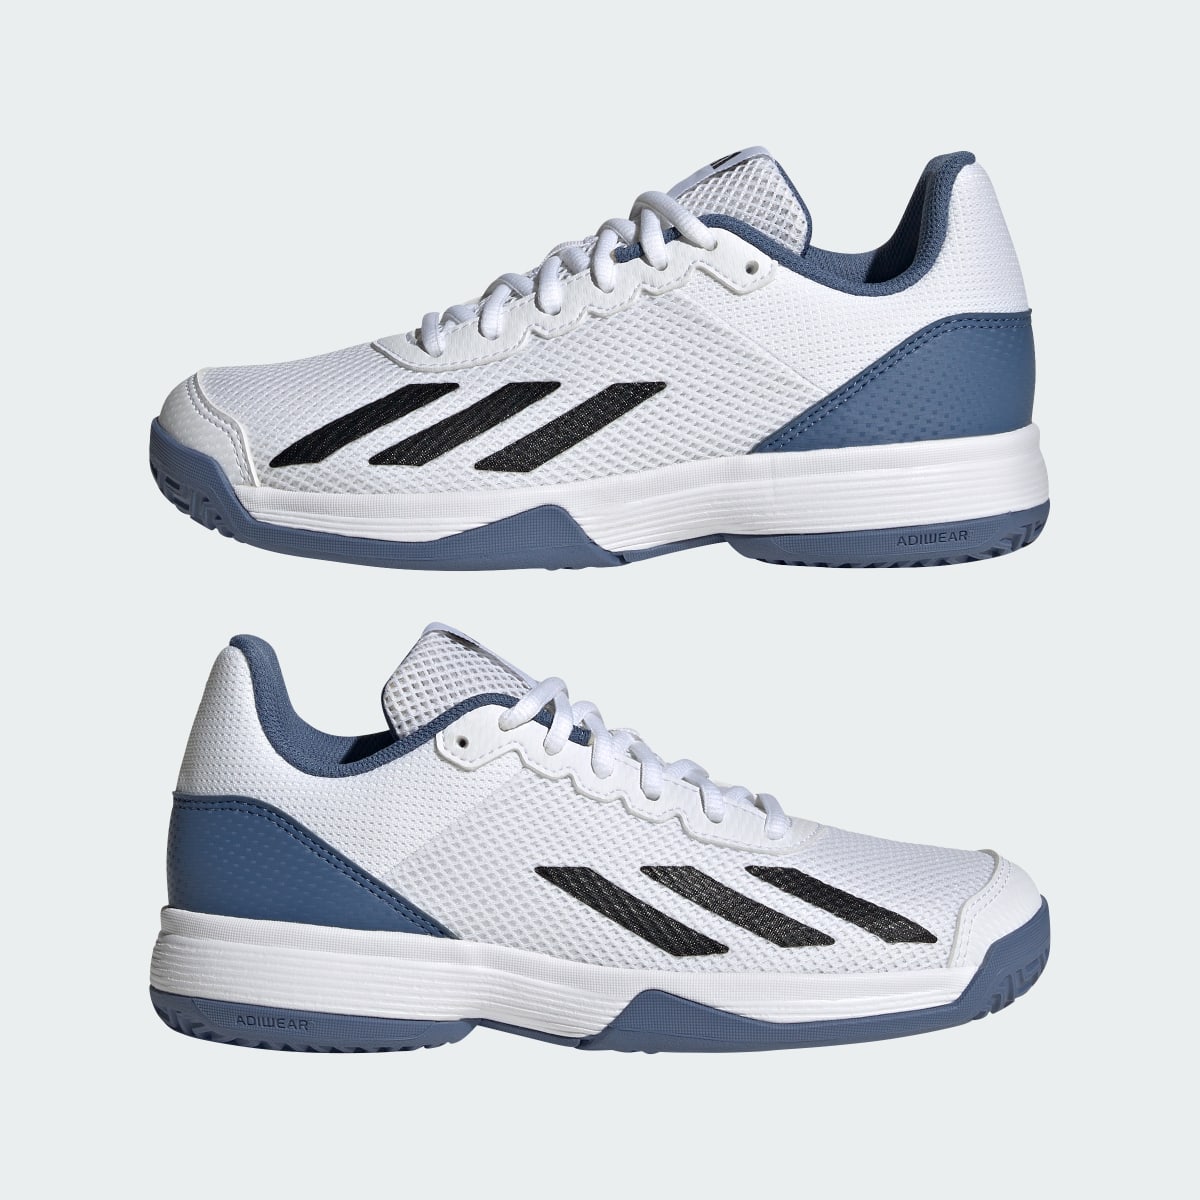 Adidas Courtflash Tennis Shoes. 8